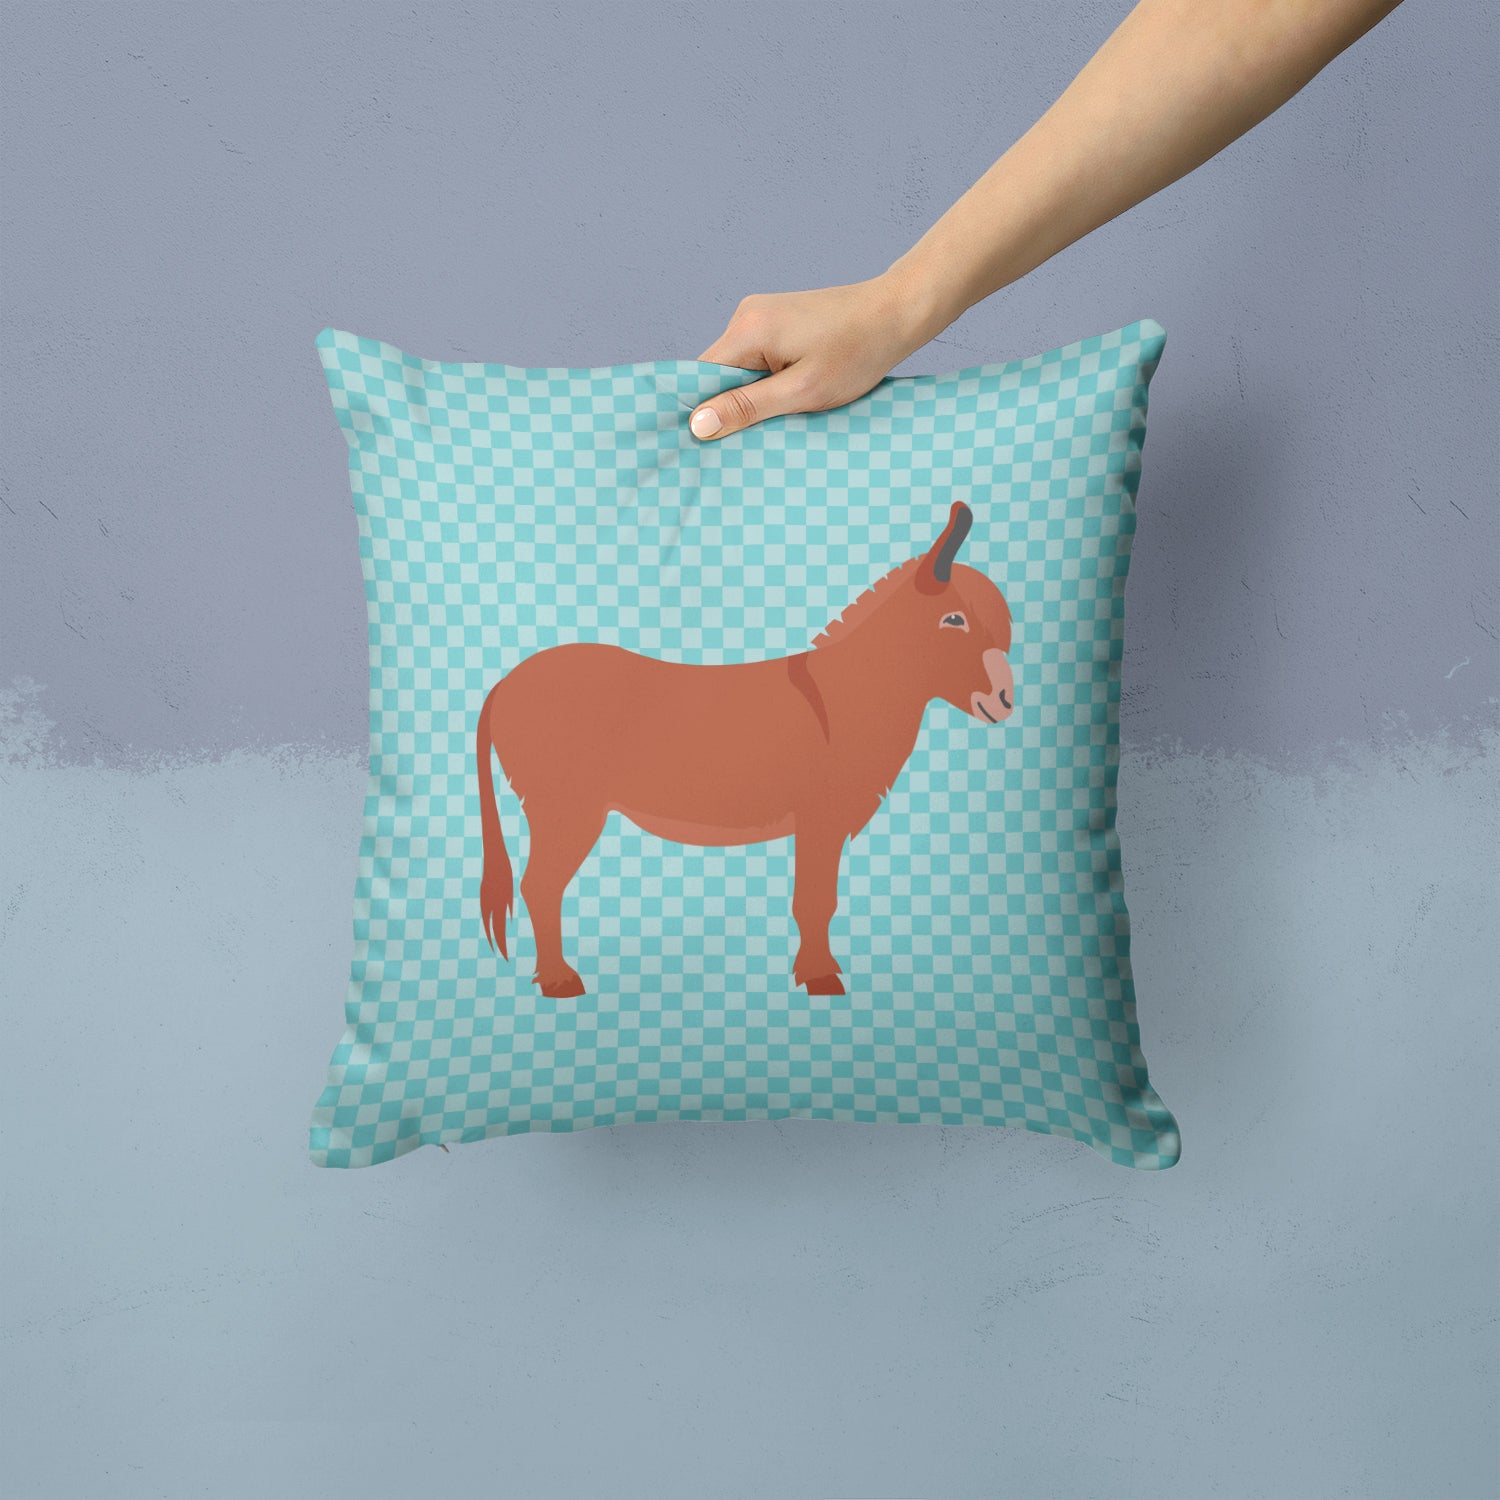 Irish Donkey Blue Check Fabric Decorative Pillow BB8022PW1414 - the-store.com